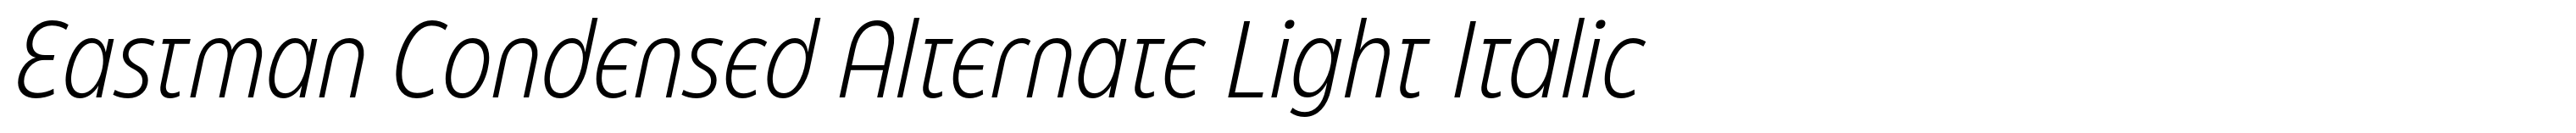 Eastman Condensed Alternate Light Italic